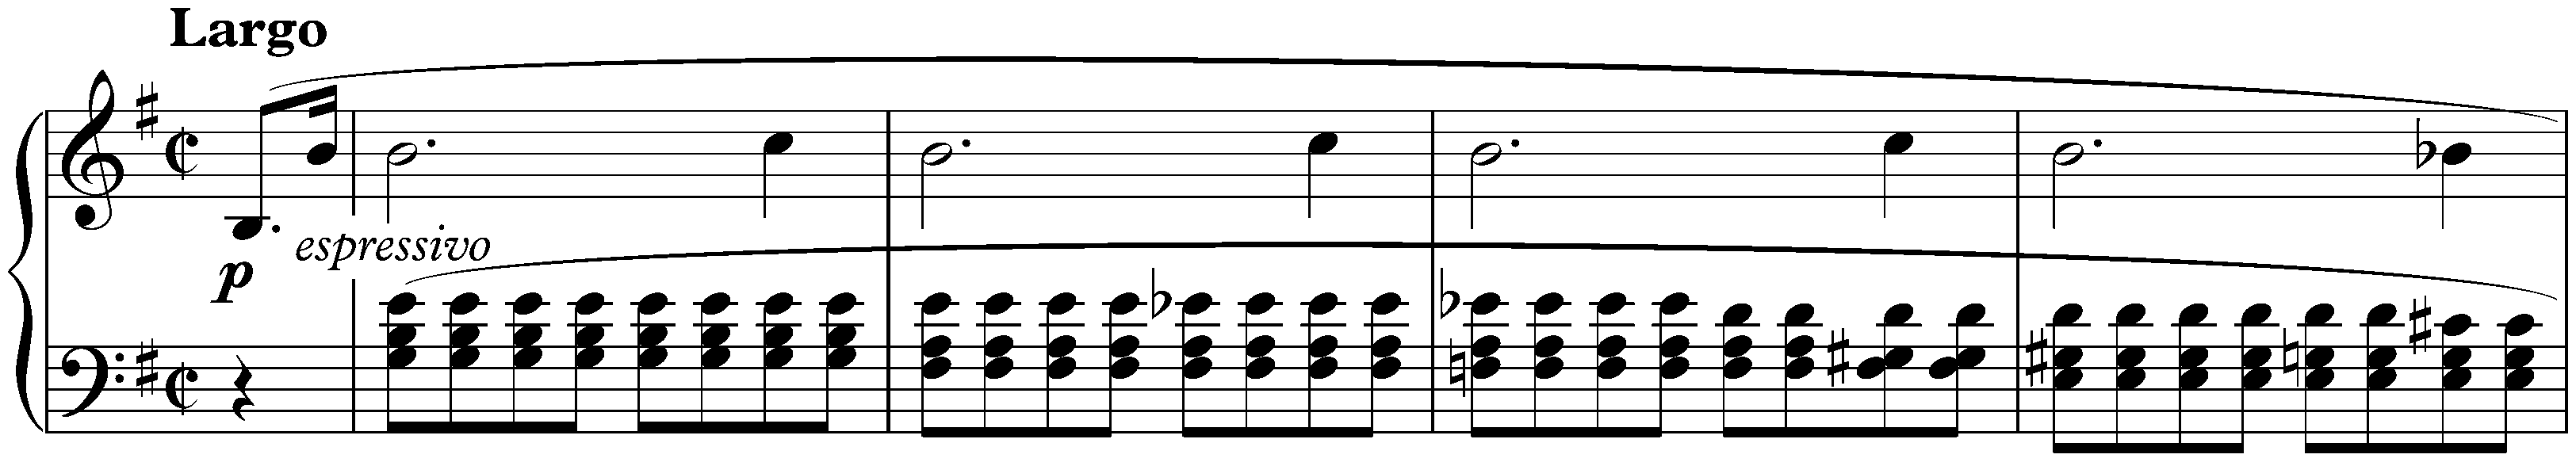 Twenty-four Préludes, op. 28; 4. E minor